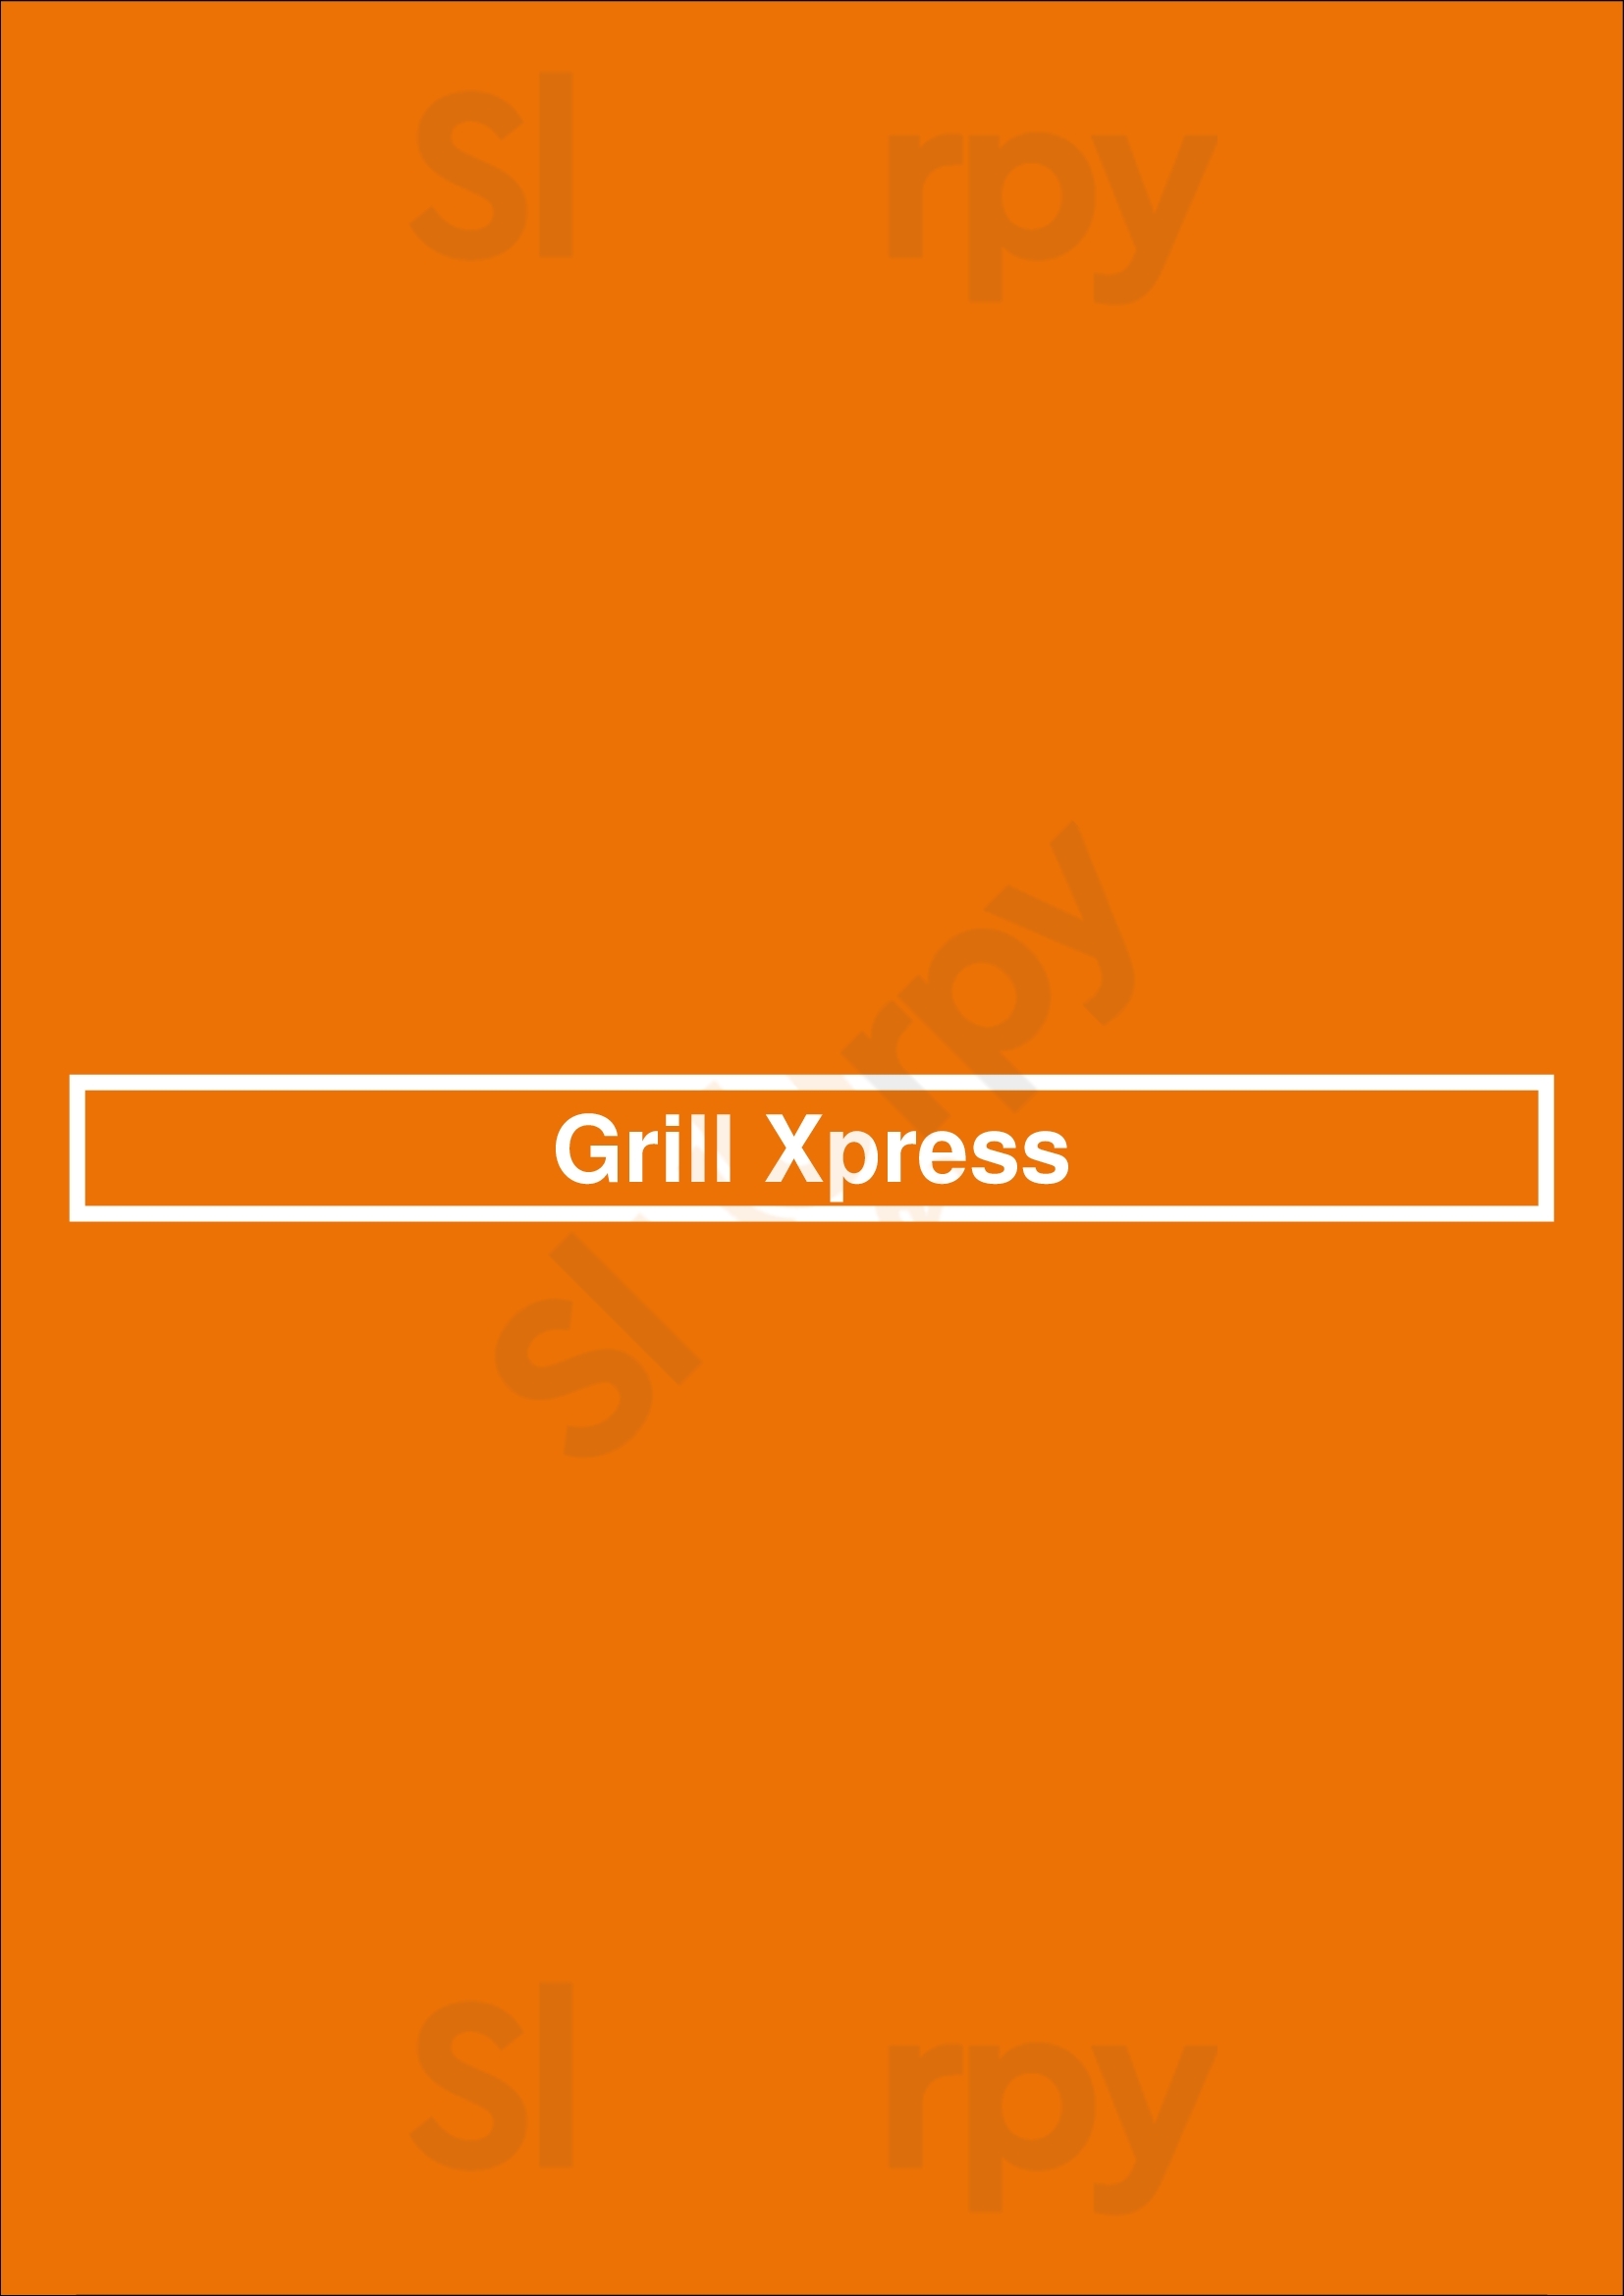 Grill Xpress Seattle Menu - 1